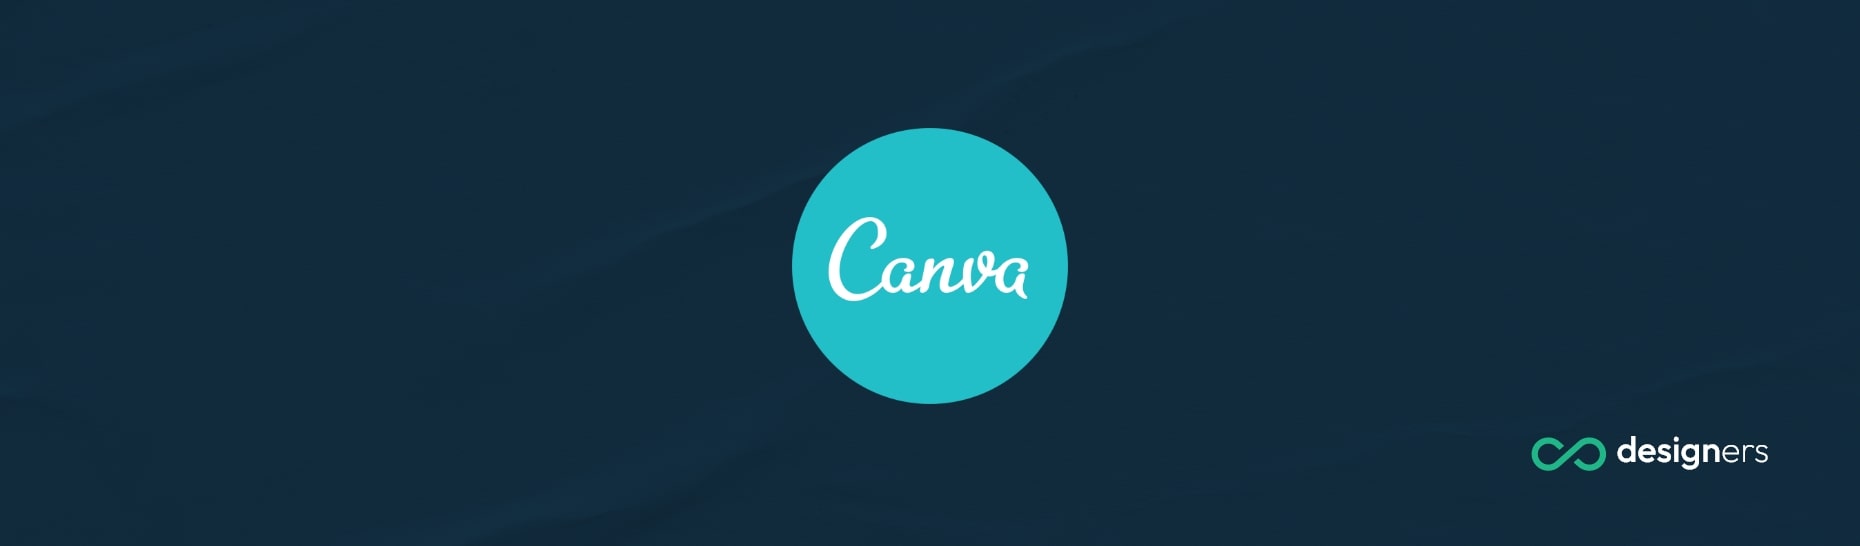 How Do I Install Canva App on My Laptop?